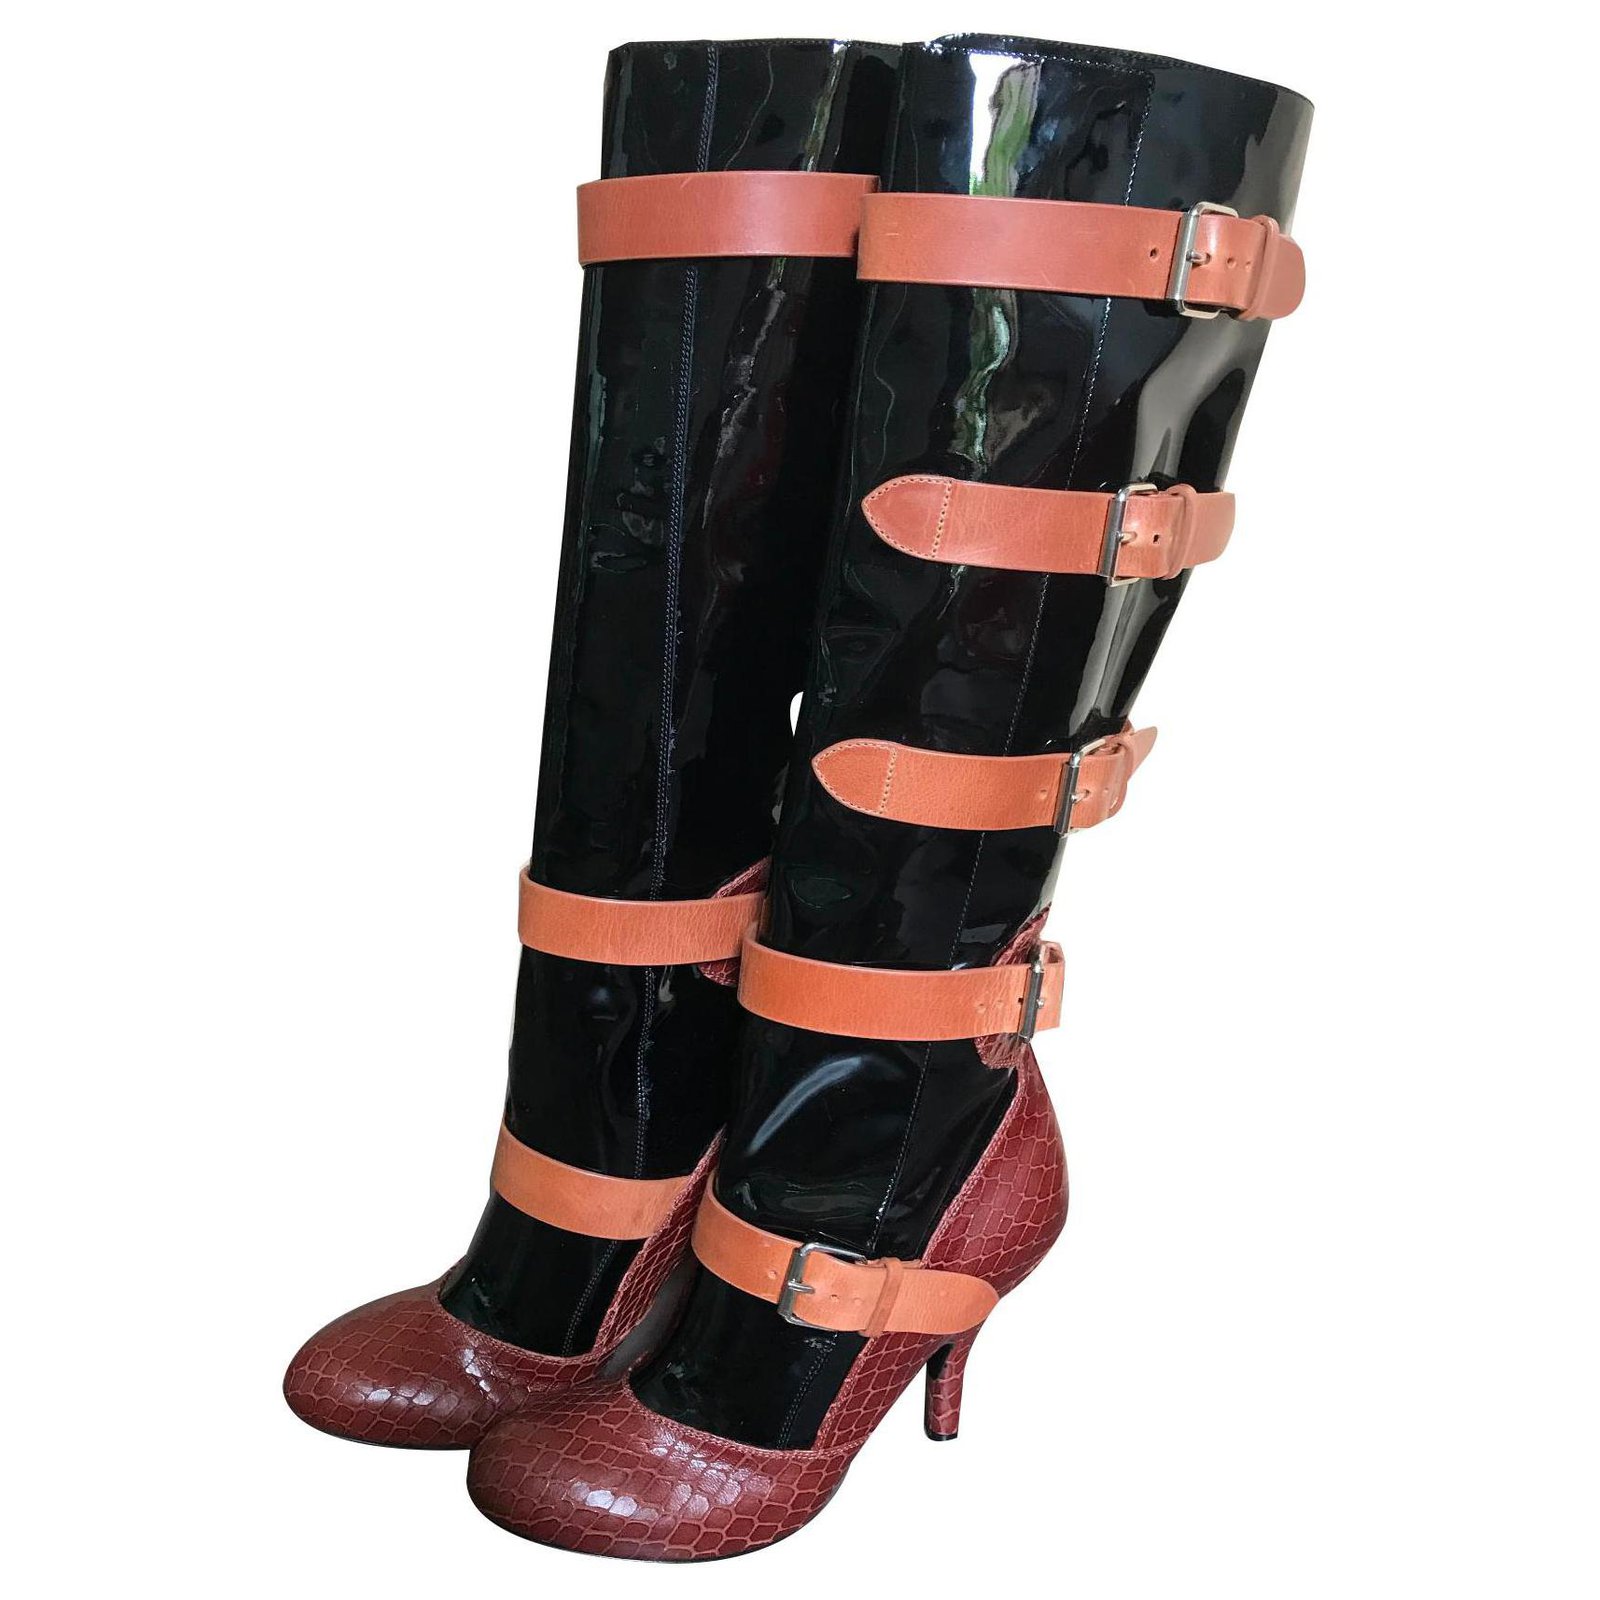 Vivienne Westwood Boots Boots Patent 